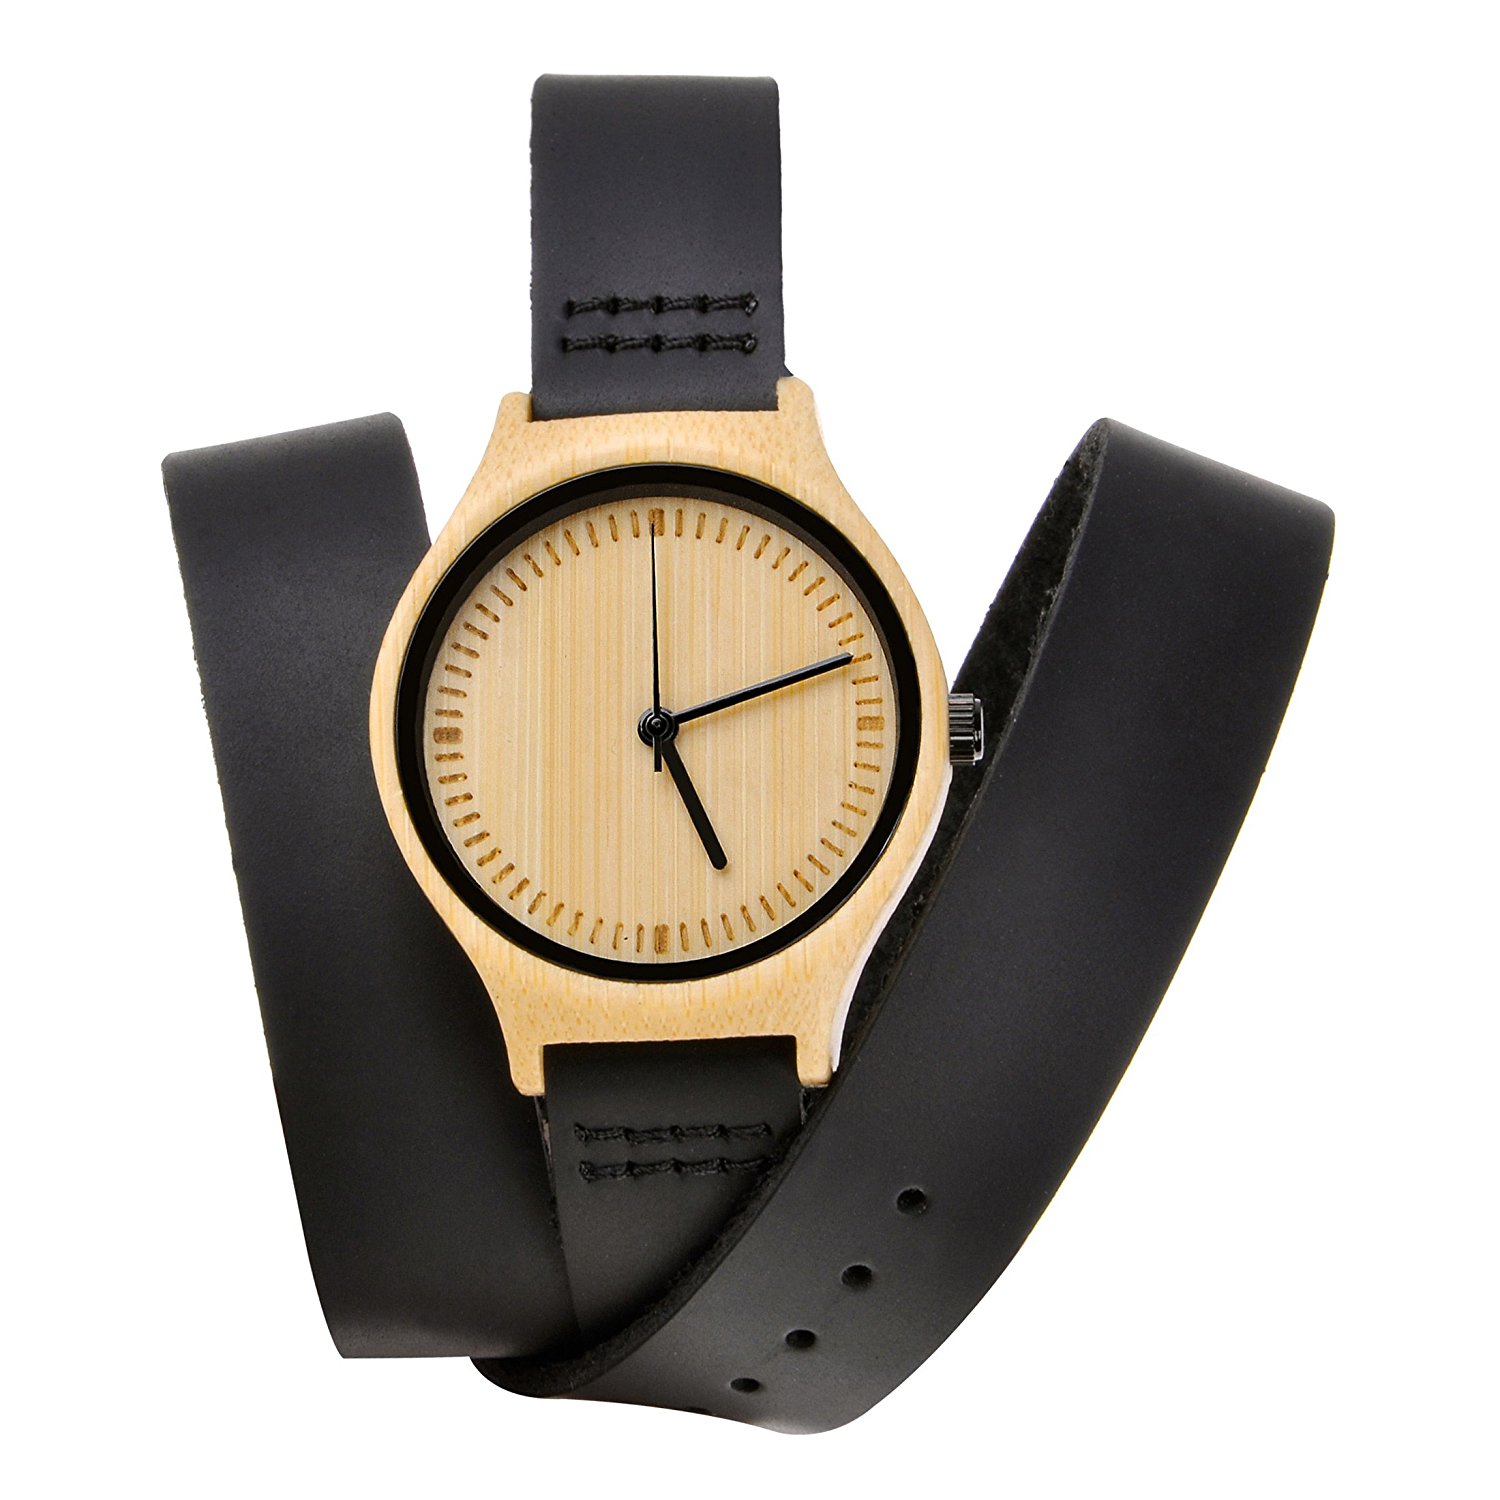 Amazon.com: ZLYC Leather Band Watch Wooden Wrap Wrist Watch Bamboo ...